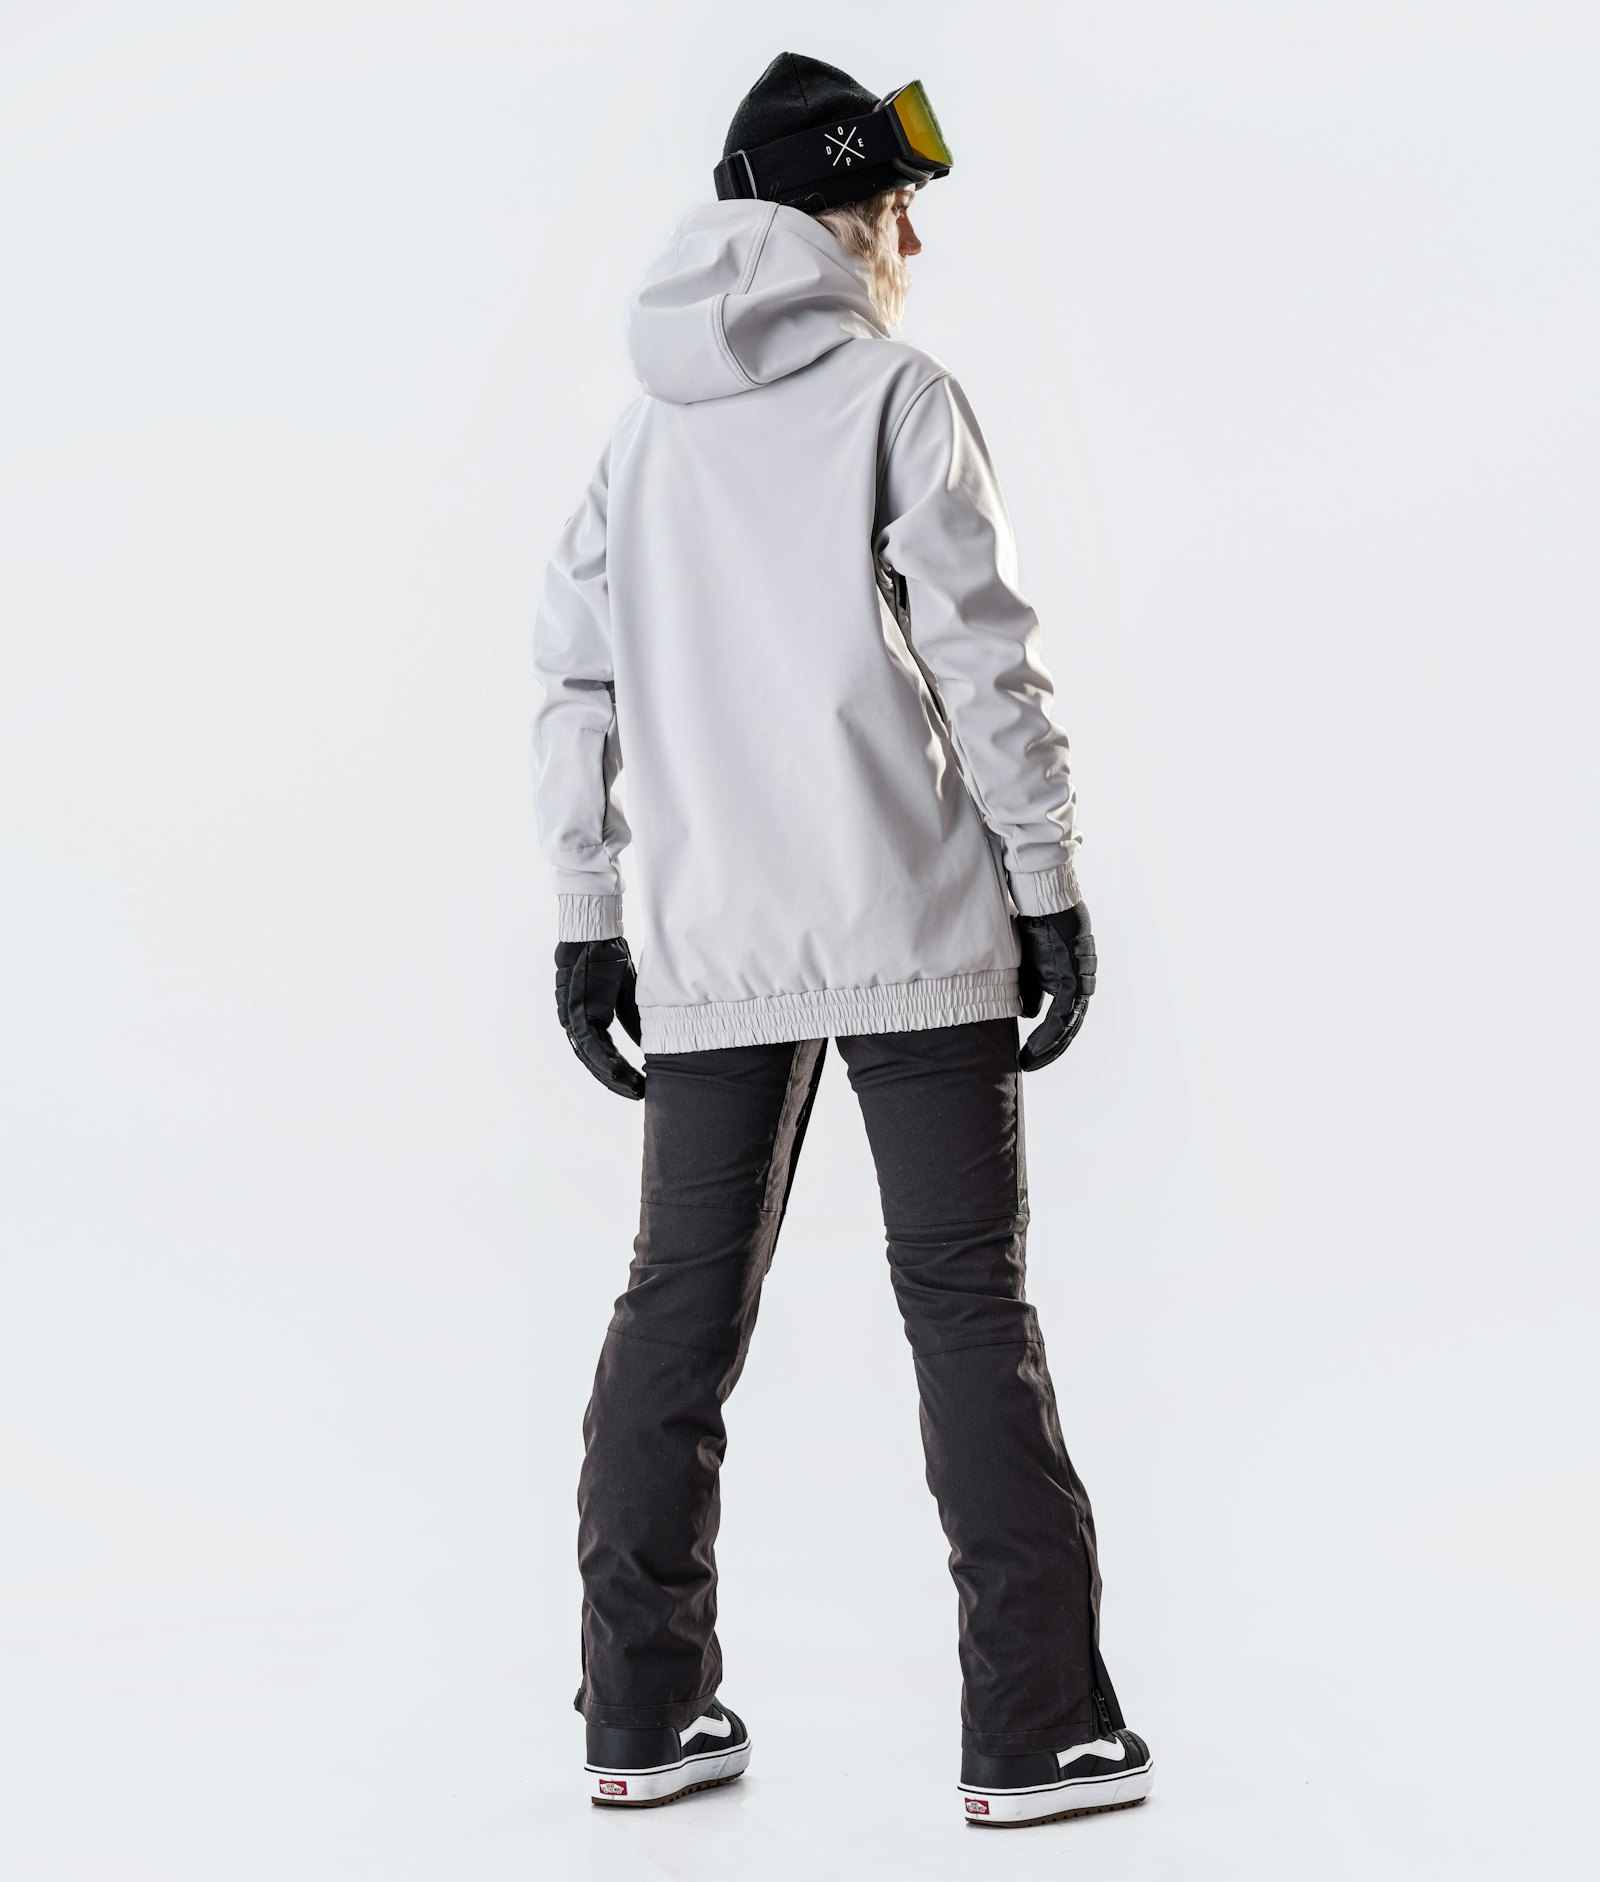 Wylie W 10k Veste Snowboard Femme Capital Light Grey